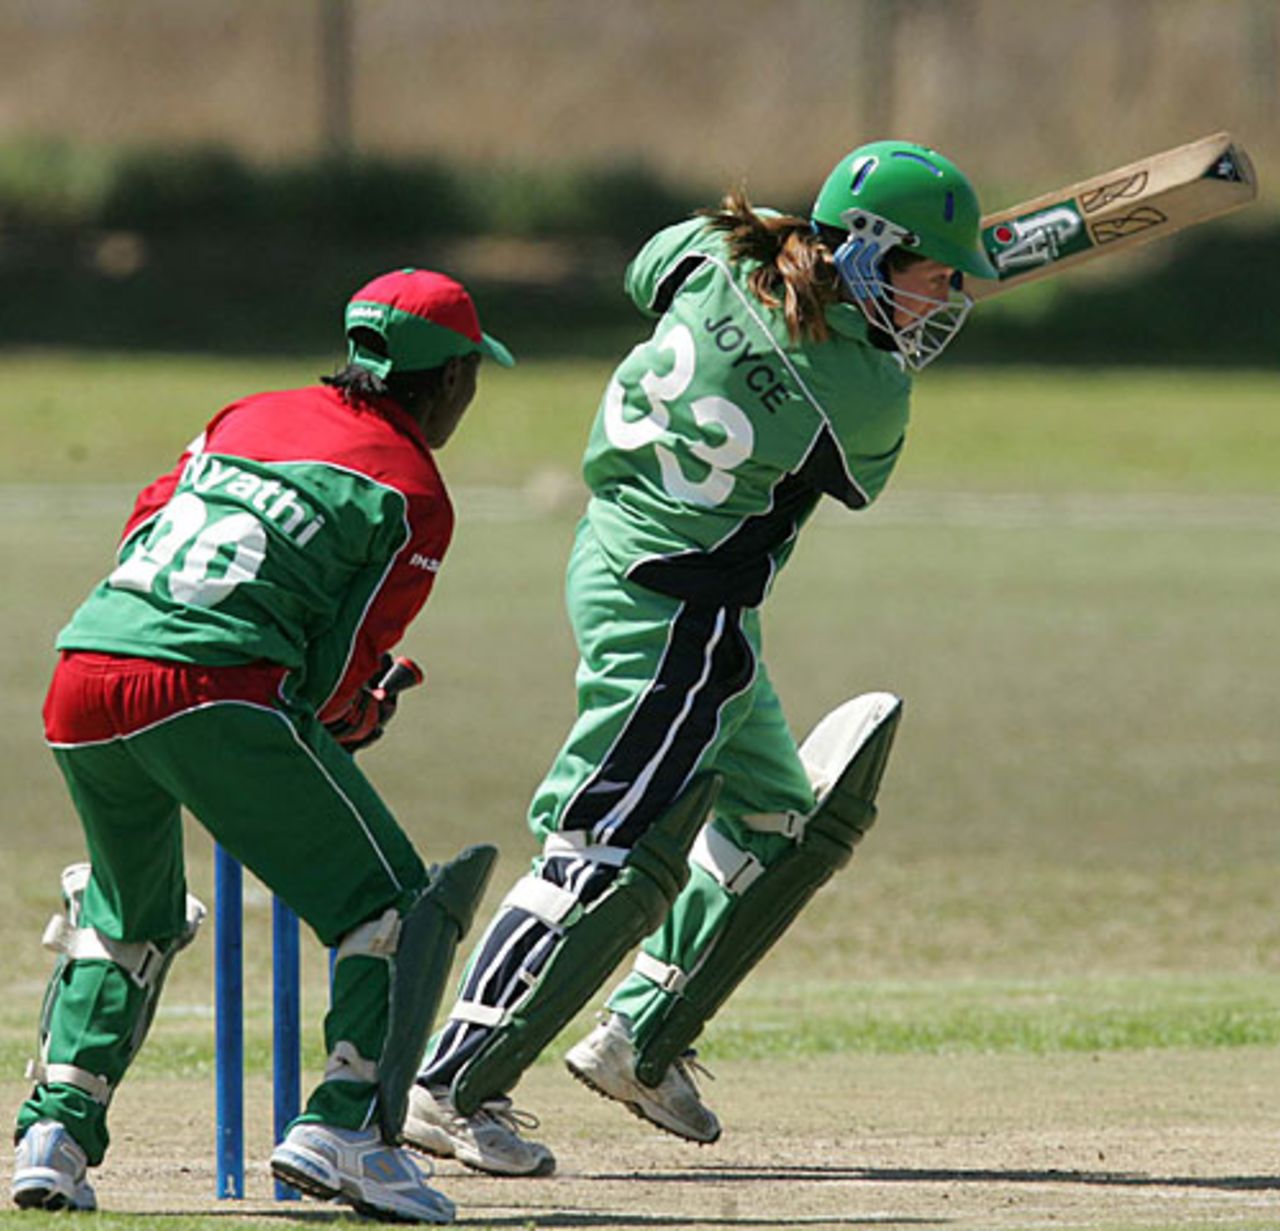 Isobel Joyce drives on her way to 70, Ireland v Zimbabwe, ICC Women's World Cup Qualifier, Stellenbosch, February 21, 2008